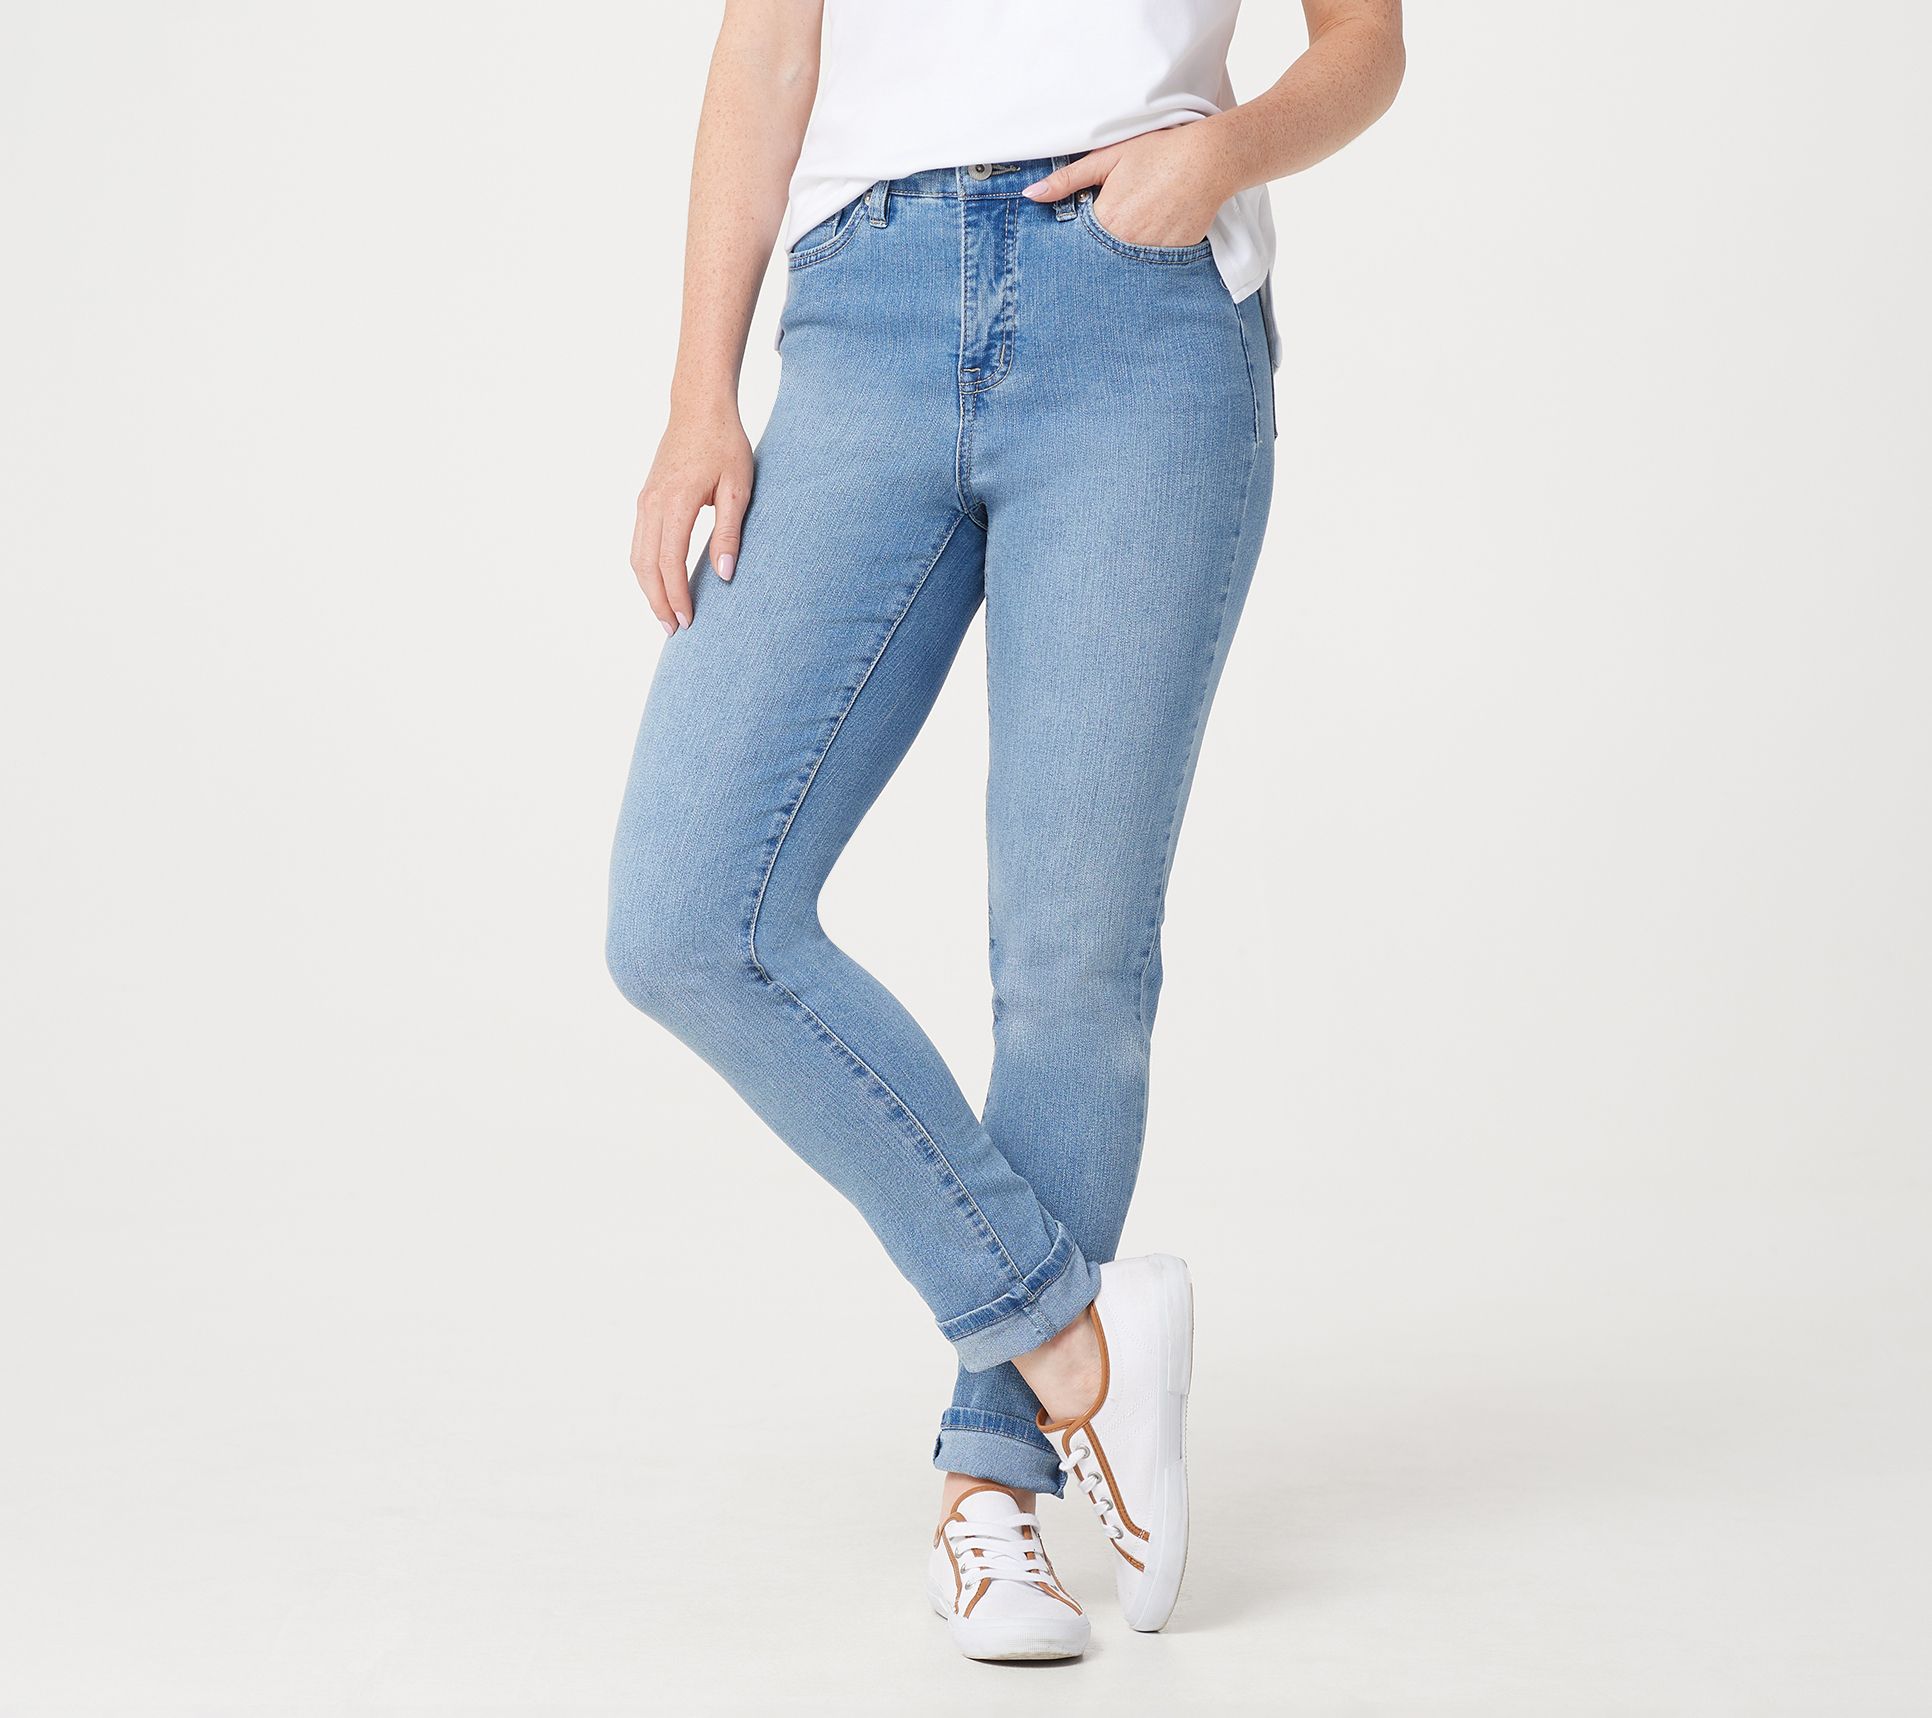 Denim & Skinny Jeans - QVC.com